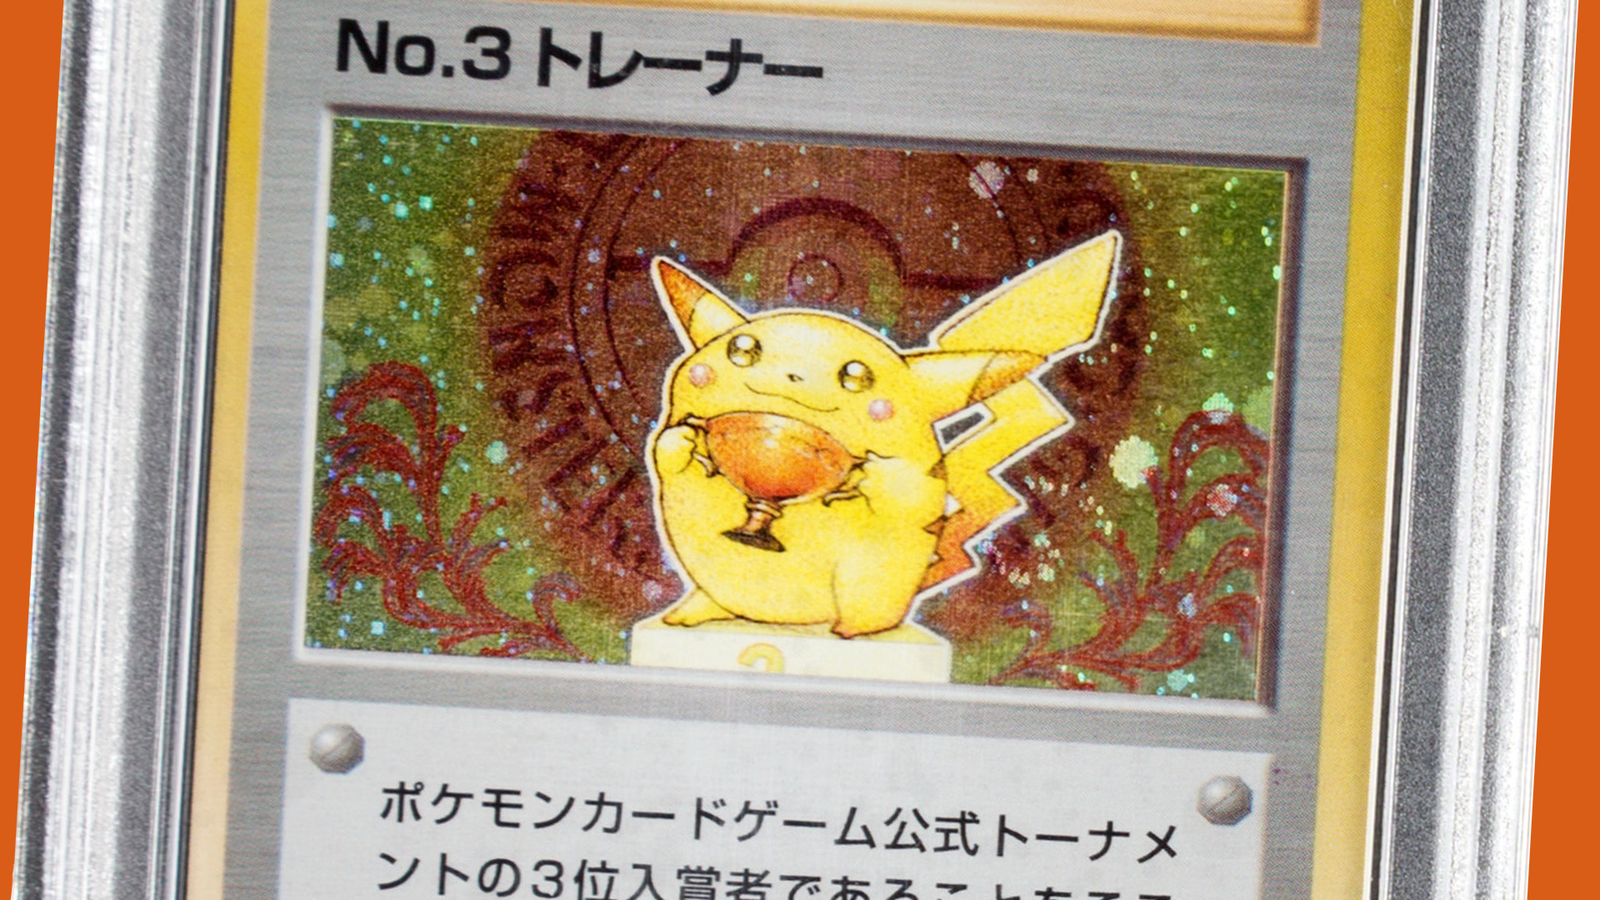 1998 Illustrator Pikachu Pokemon Card BGS 7-5 - Beckett News